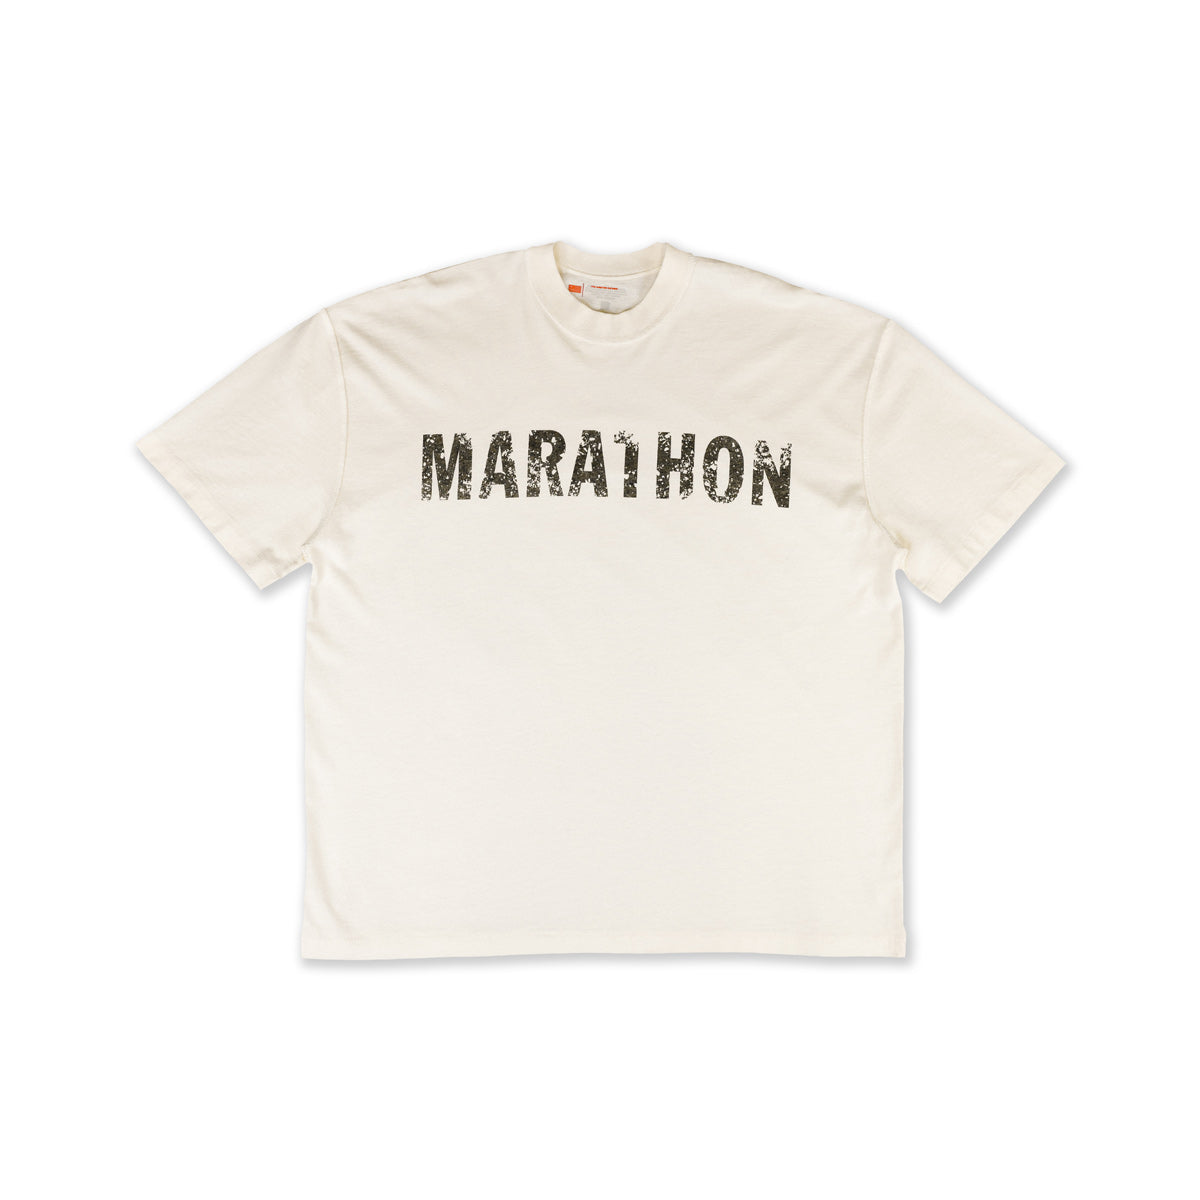 Marathon Distressed T-Shirt - Bone/Black - Front